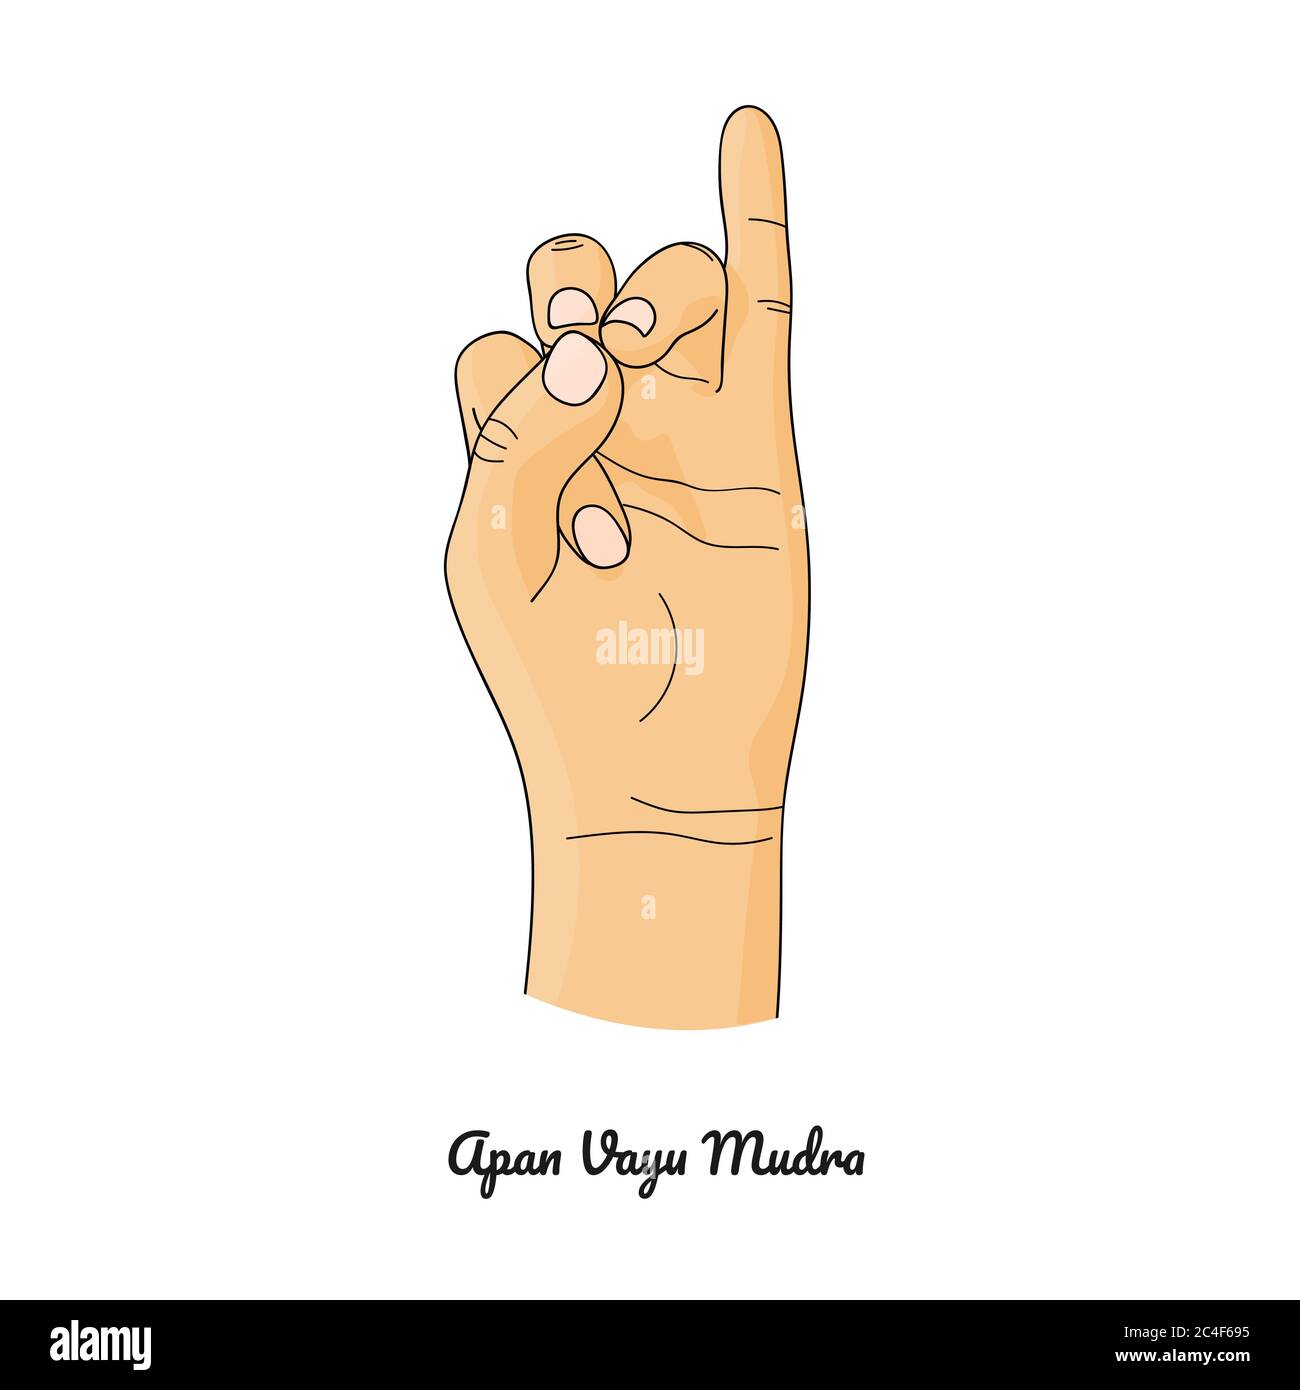 Apan Vayu Mudra / Lifesaver Gesture. Vettore. Illustrazione Vettoriale